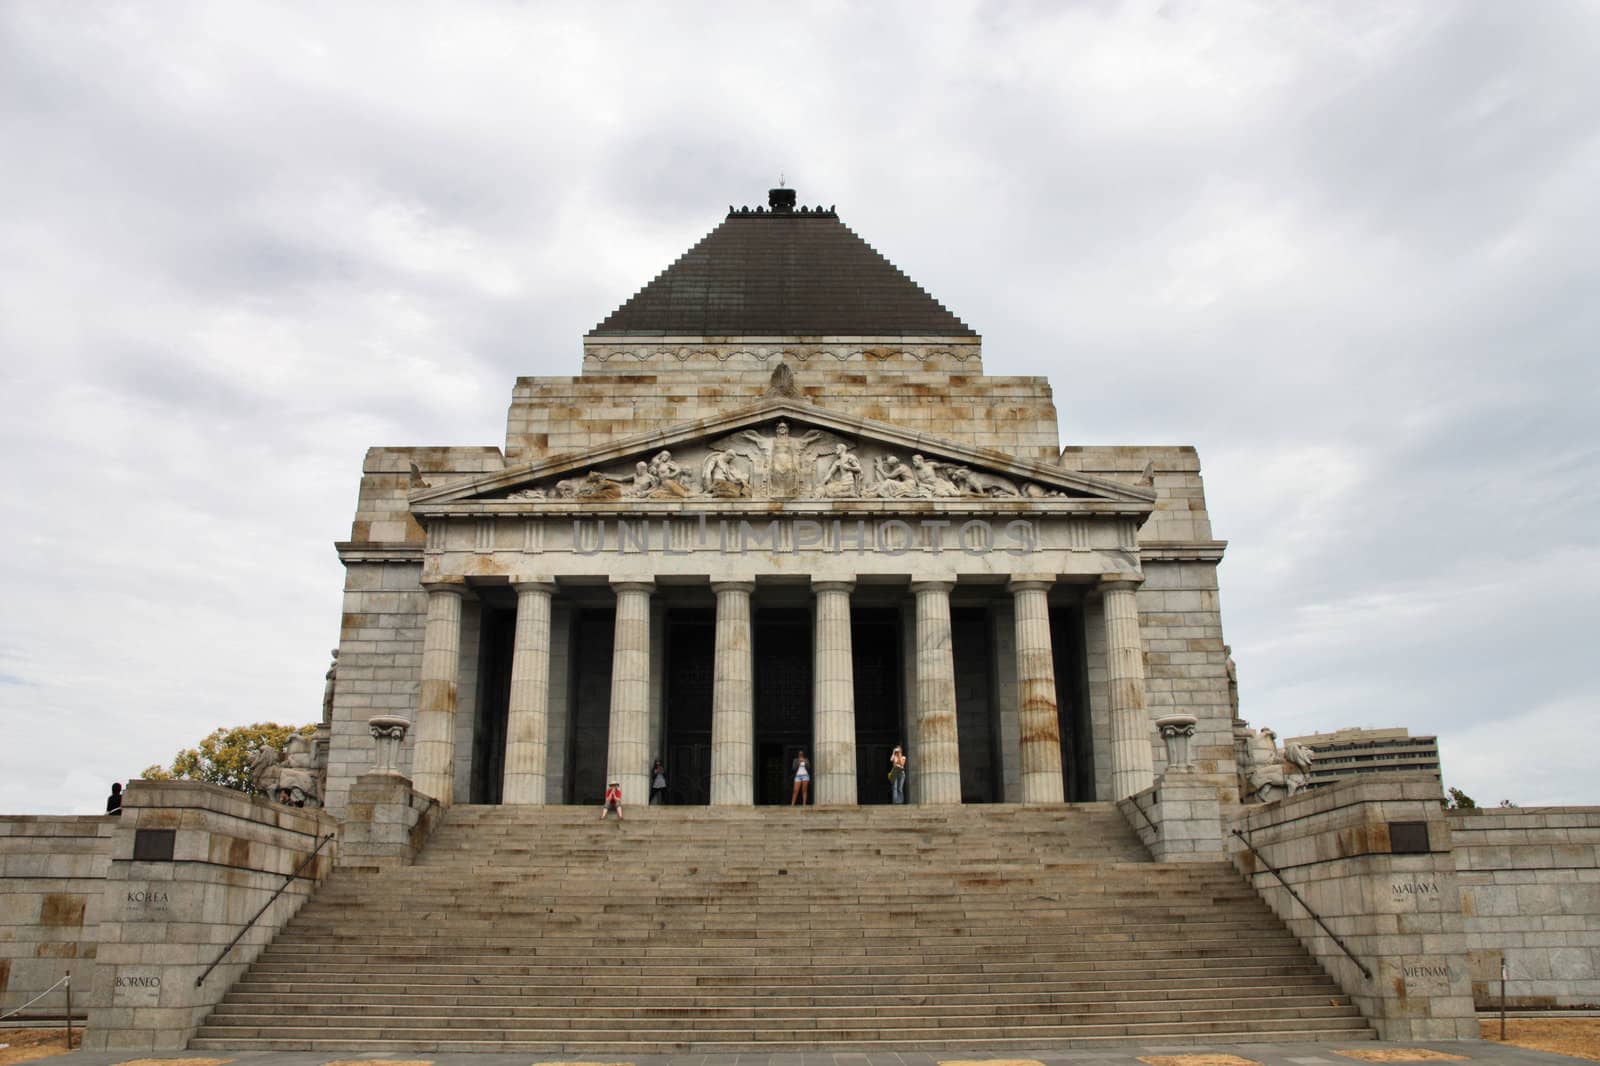 Shrine of Remembrance - huge war memorial in Melbourne, Australia